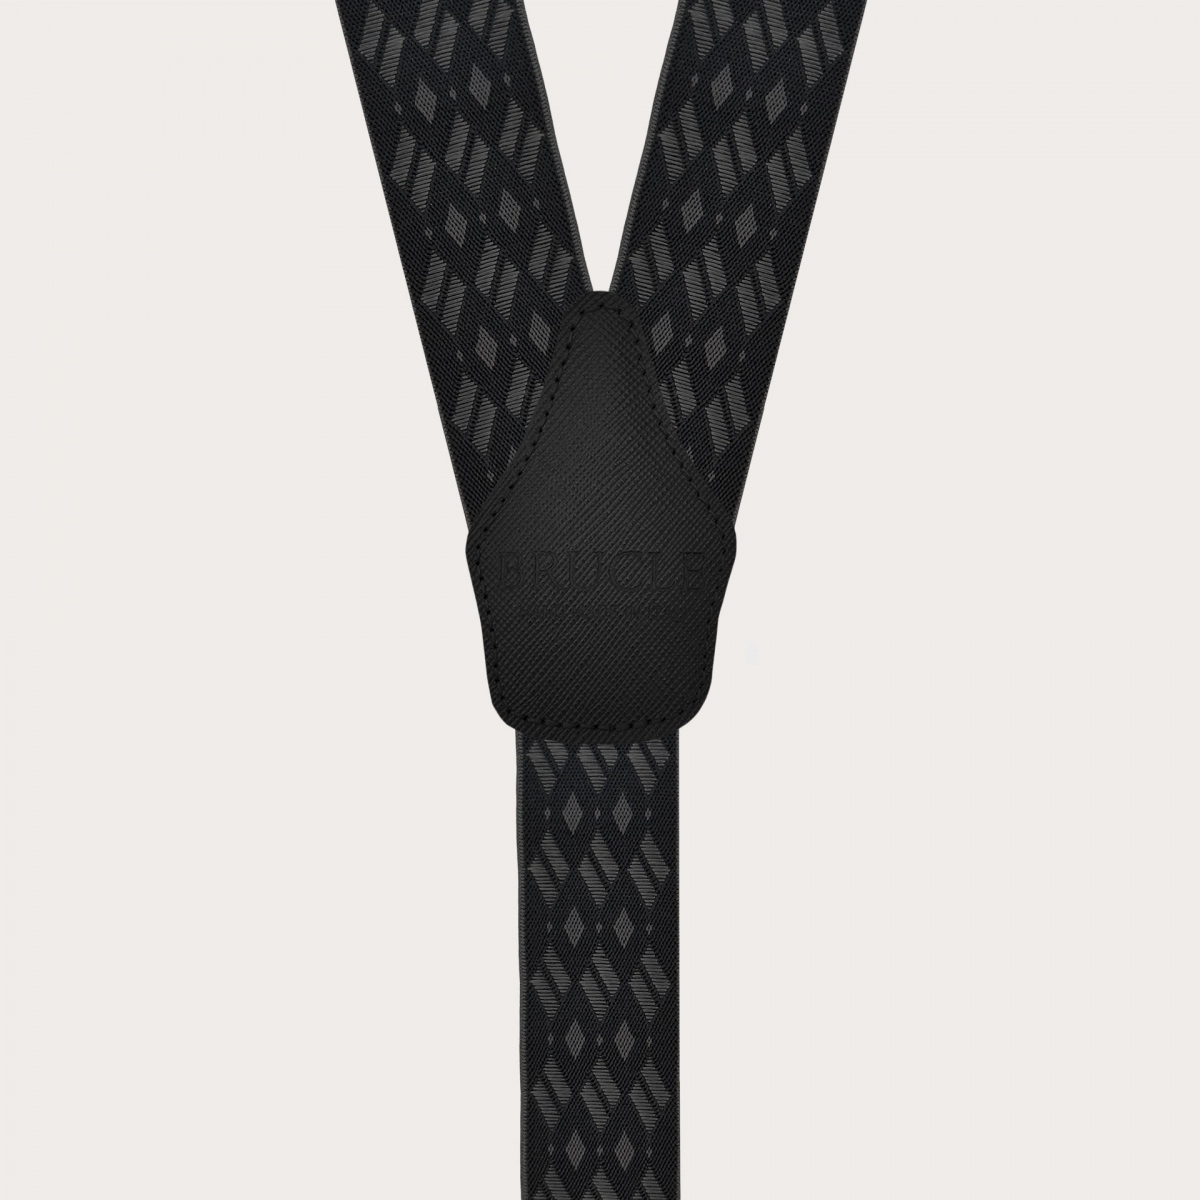 Wide black and grey diamond-patterned elastic suspenders